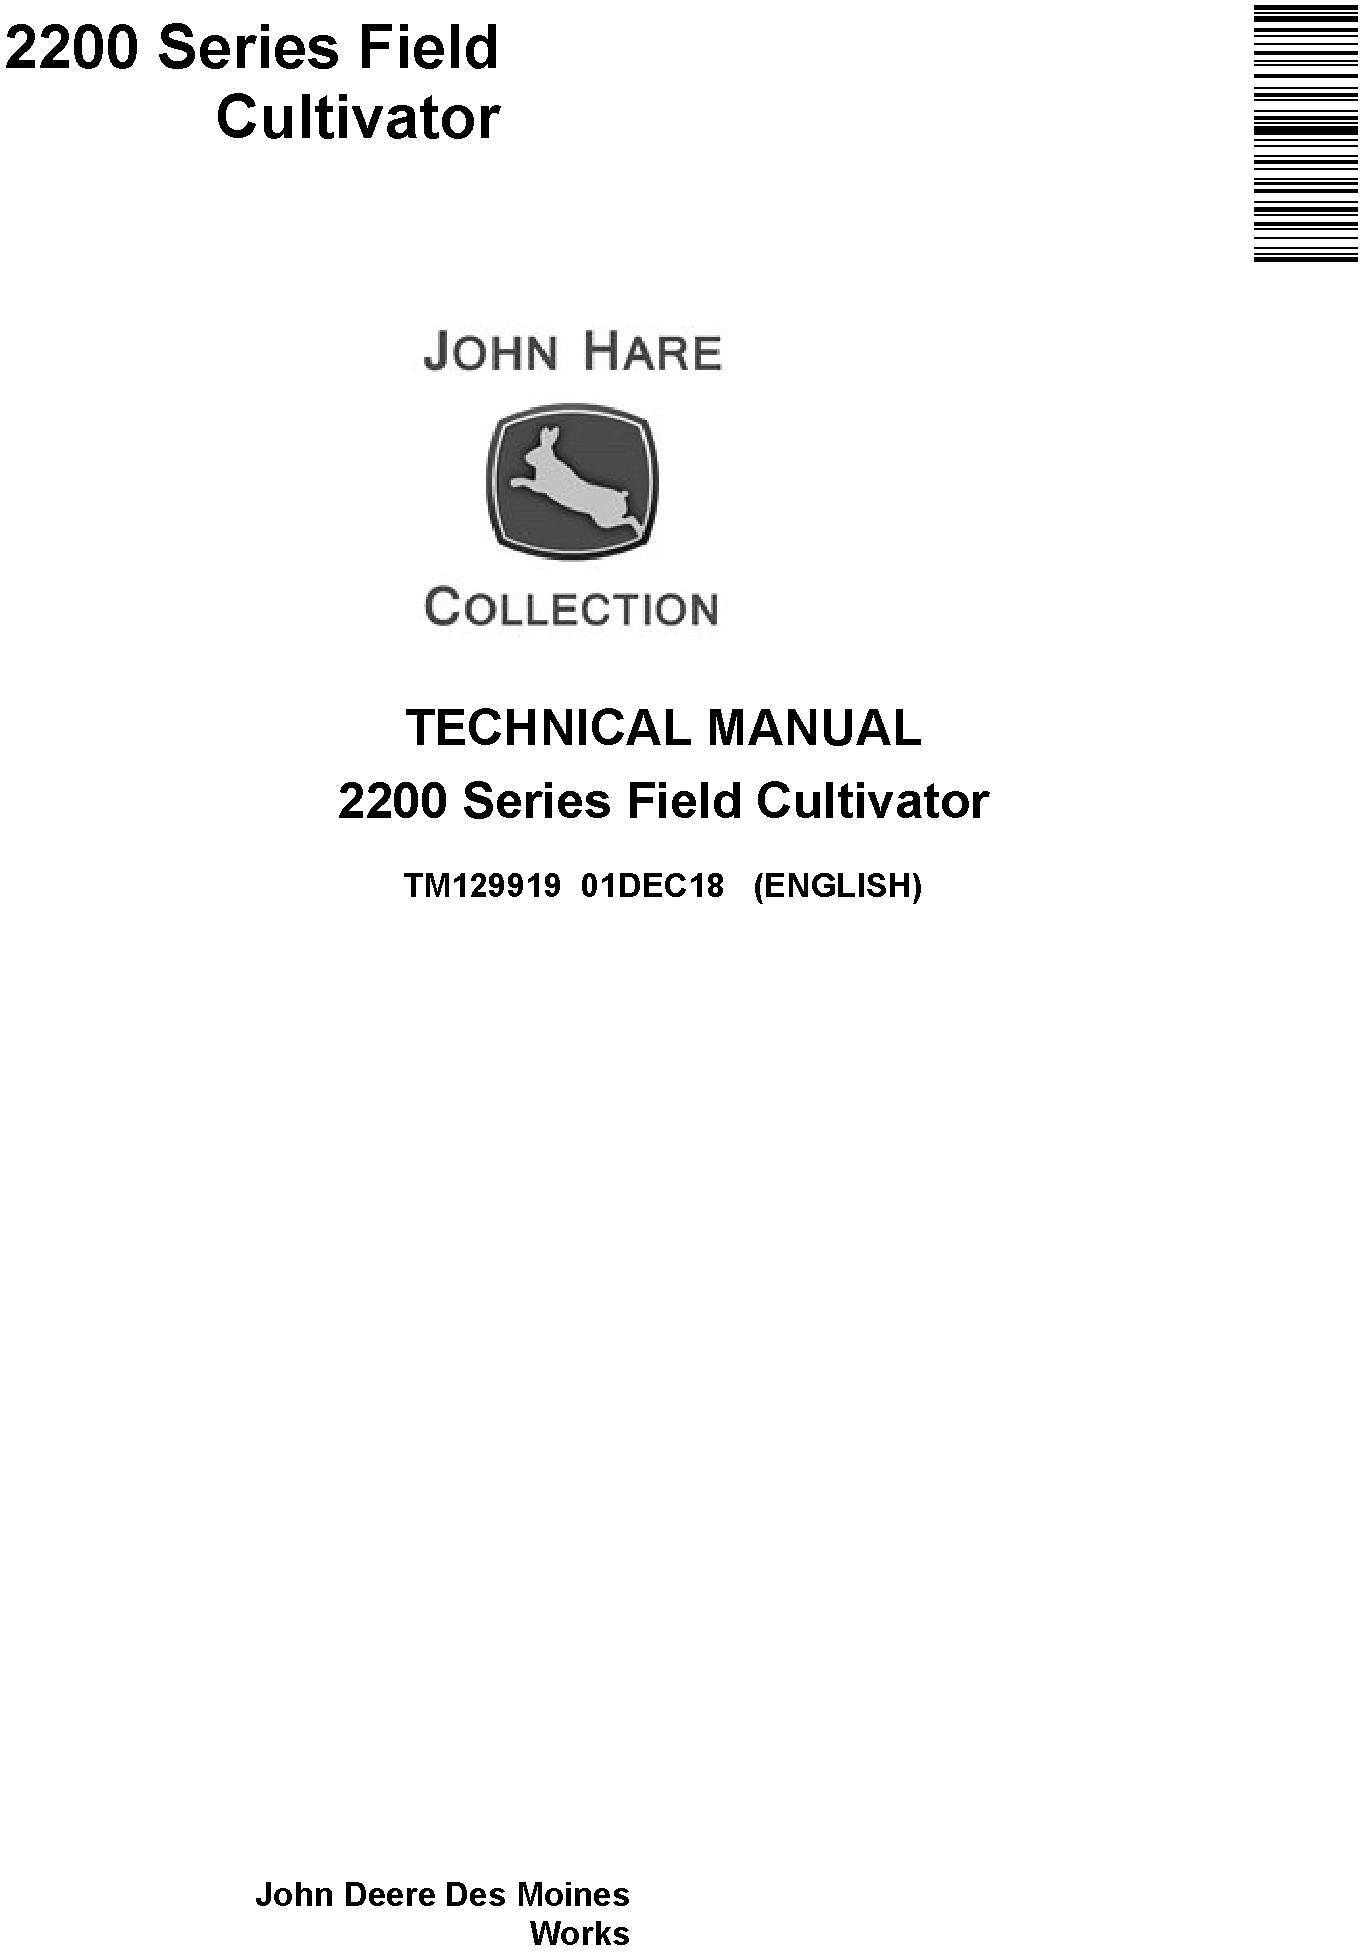 John Deere 2200 Series Field Cultivator Technical Manual TM129919